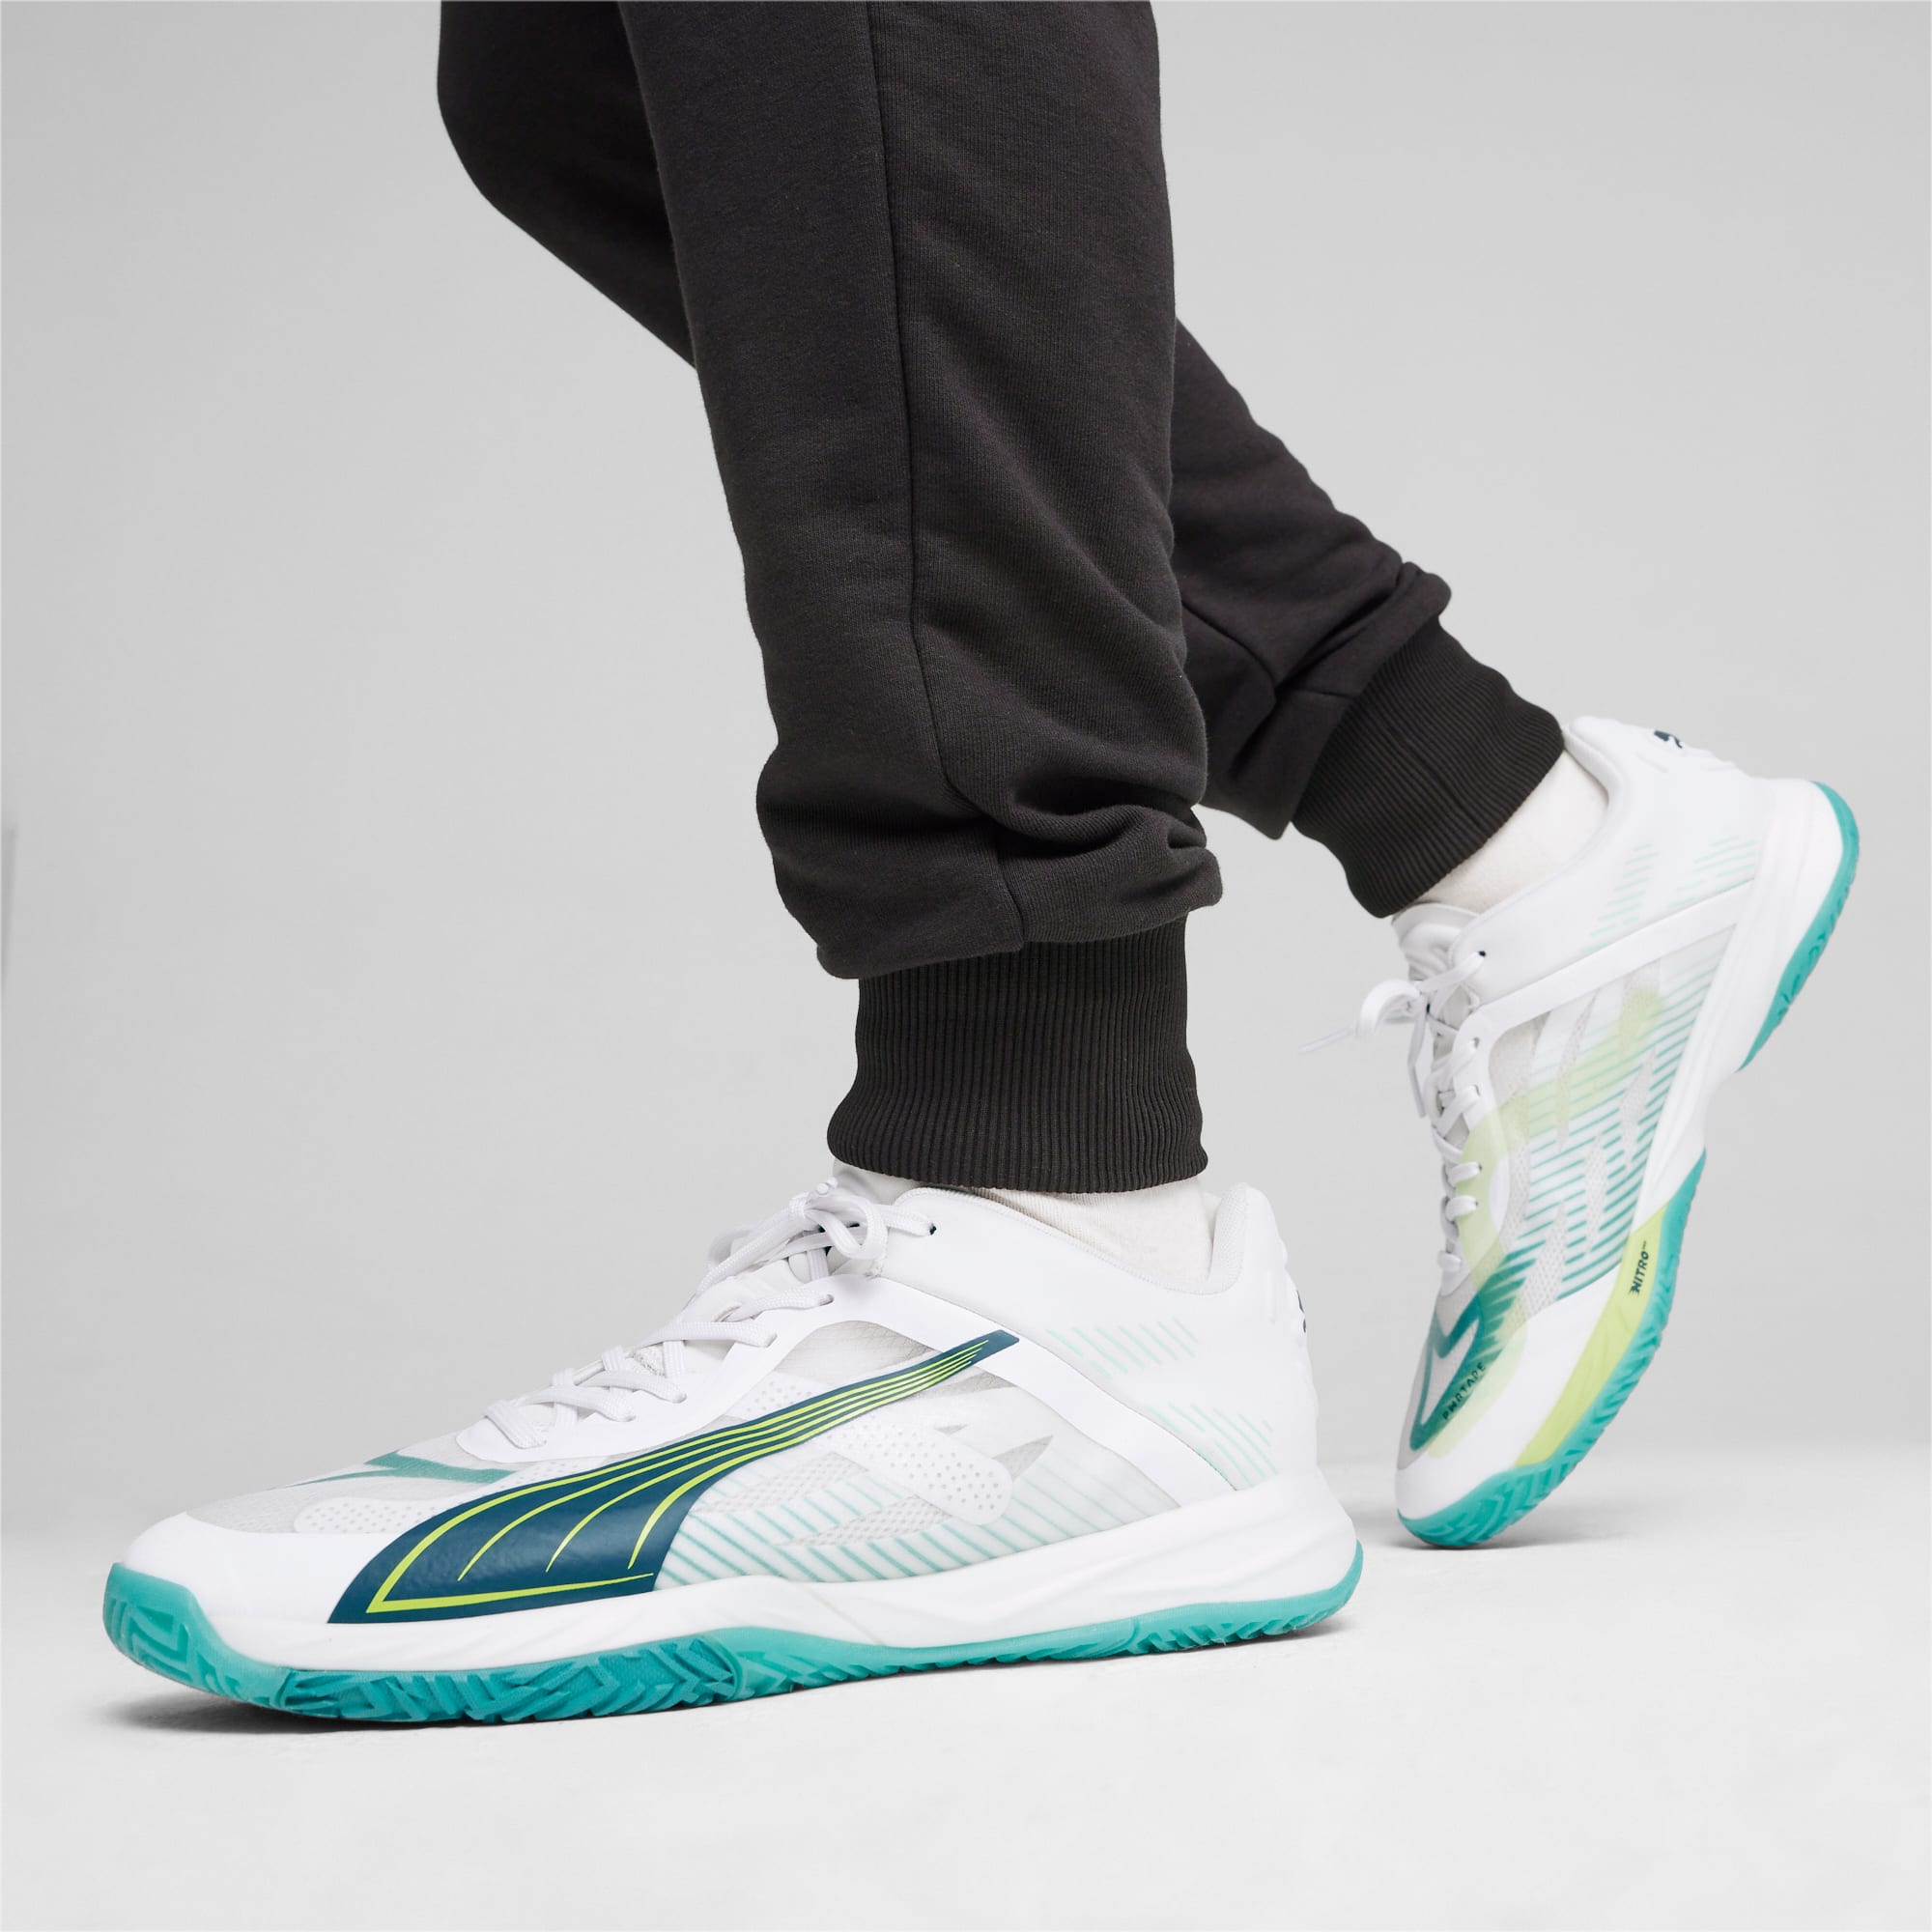 Women's PUMA Accelerate Nitro Sqd Indoor Sports Shoe Sneakers, White/Ocean Tropic/Sparkling Green